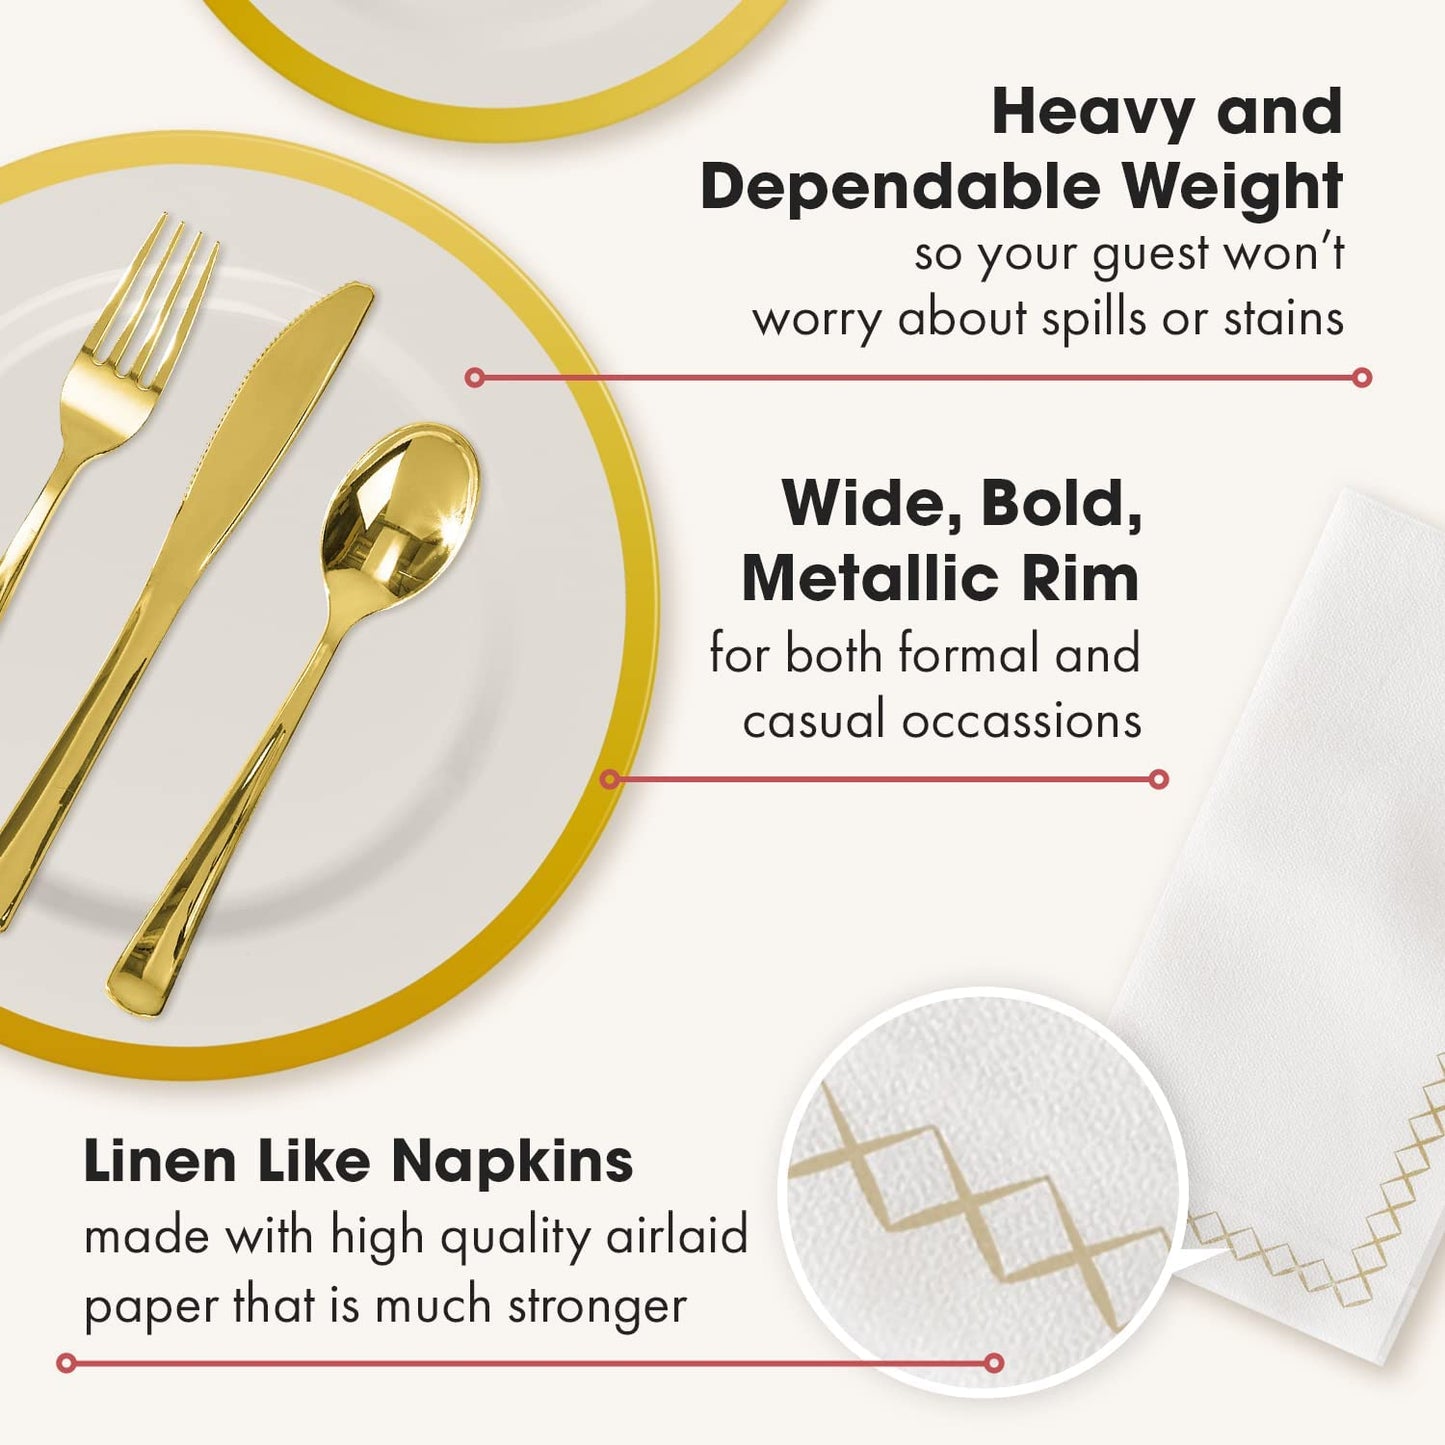 Metallic Gold & White Disposable Dinnerware Set - 25 Guests